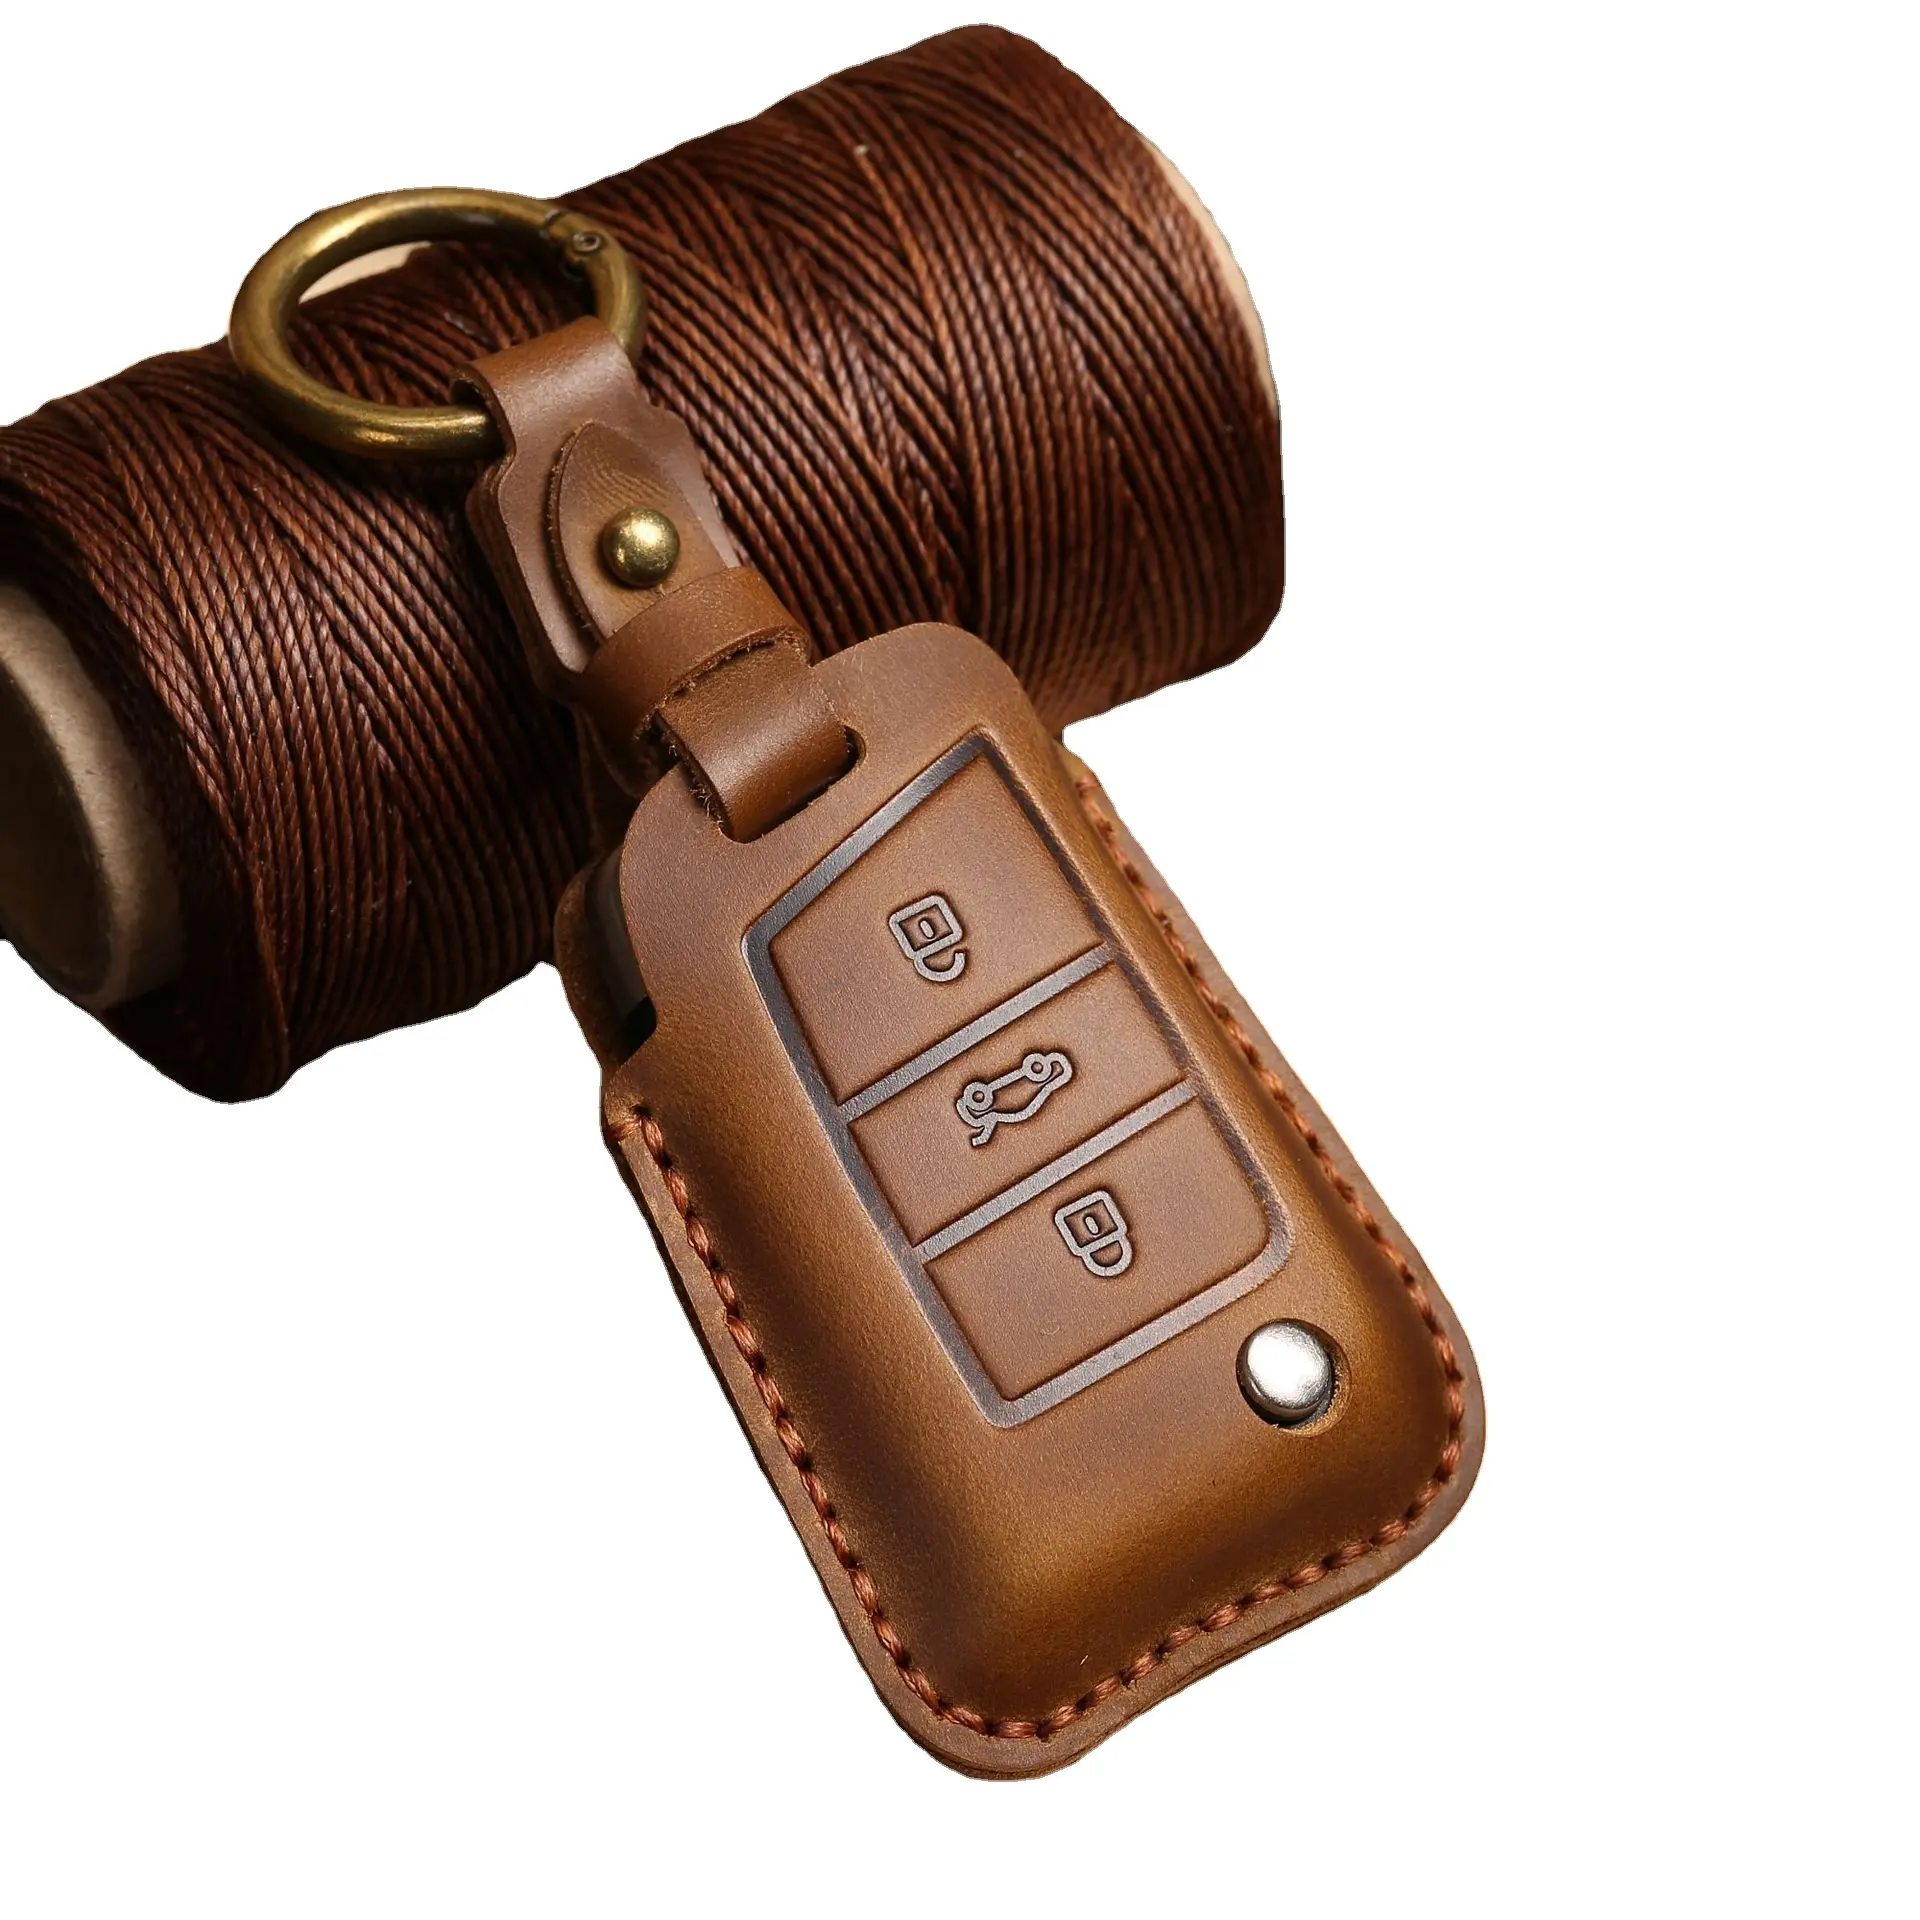 Waterdichte Lederen Auto Key Case Reliëf Stempelen Logo Smart Leather Touch Voor Autosleutel